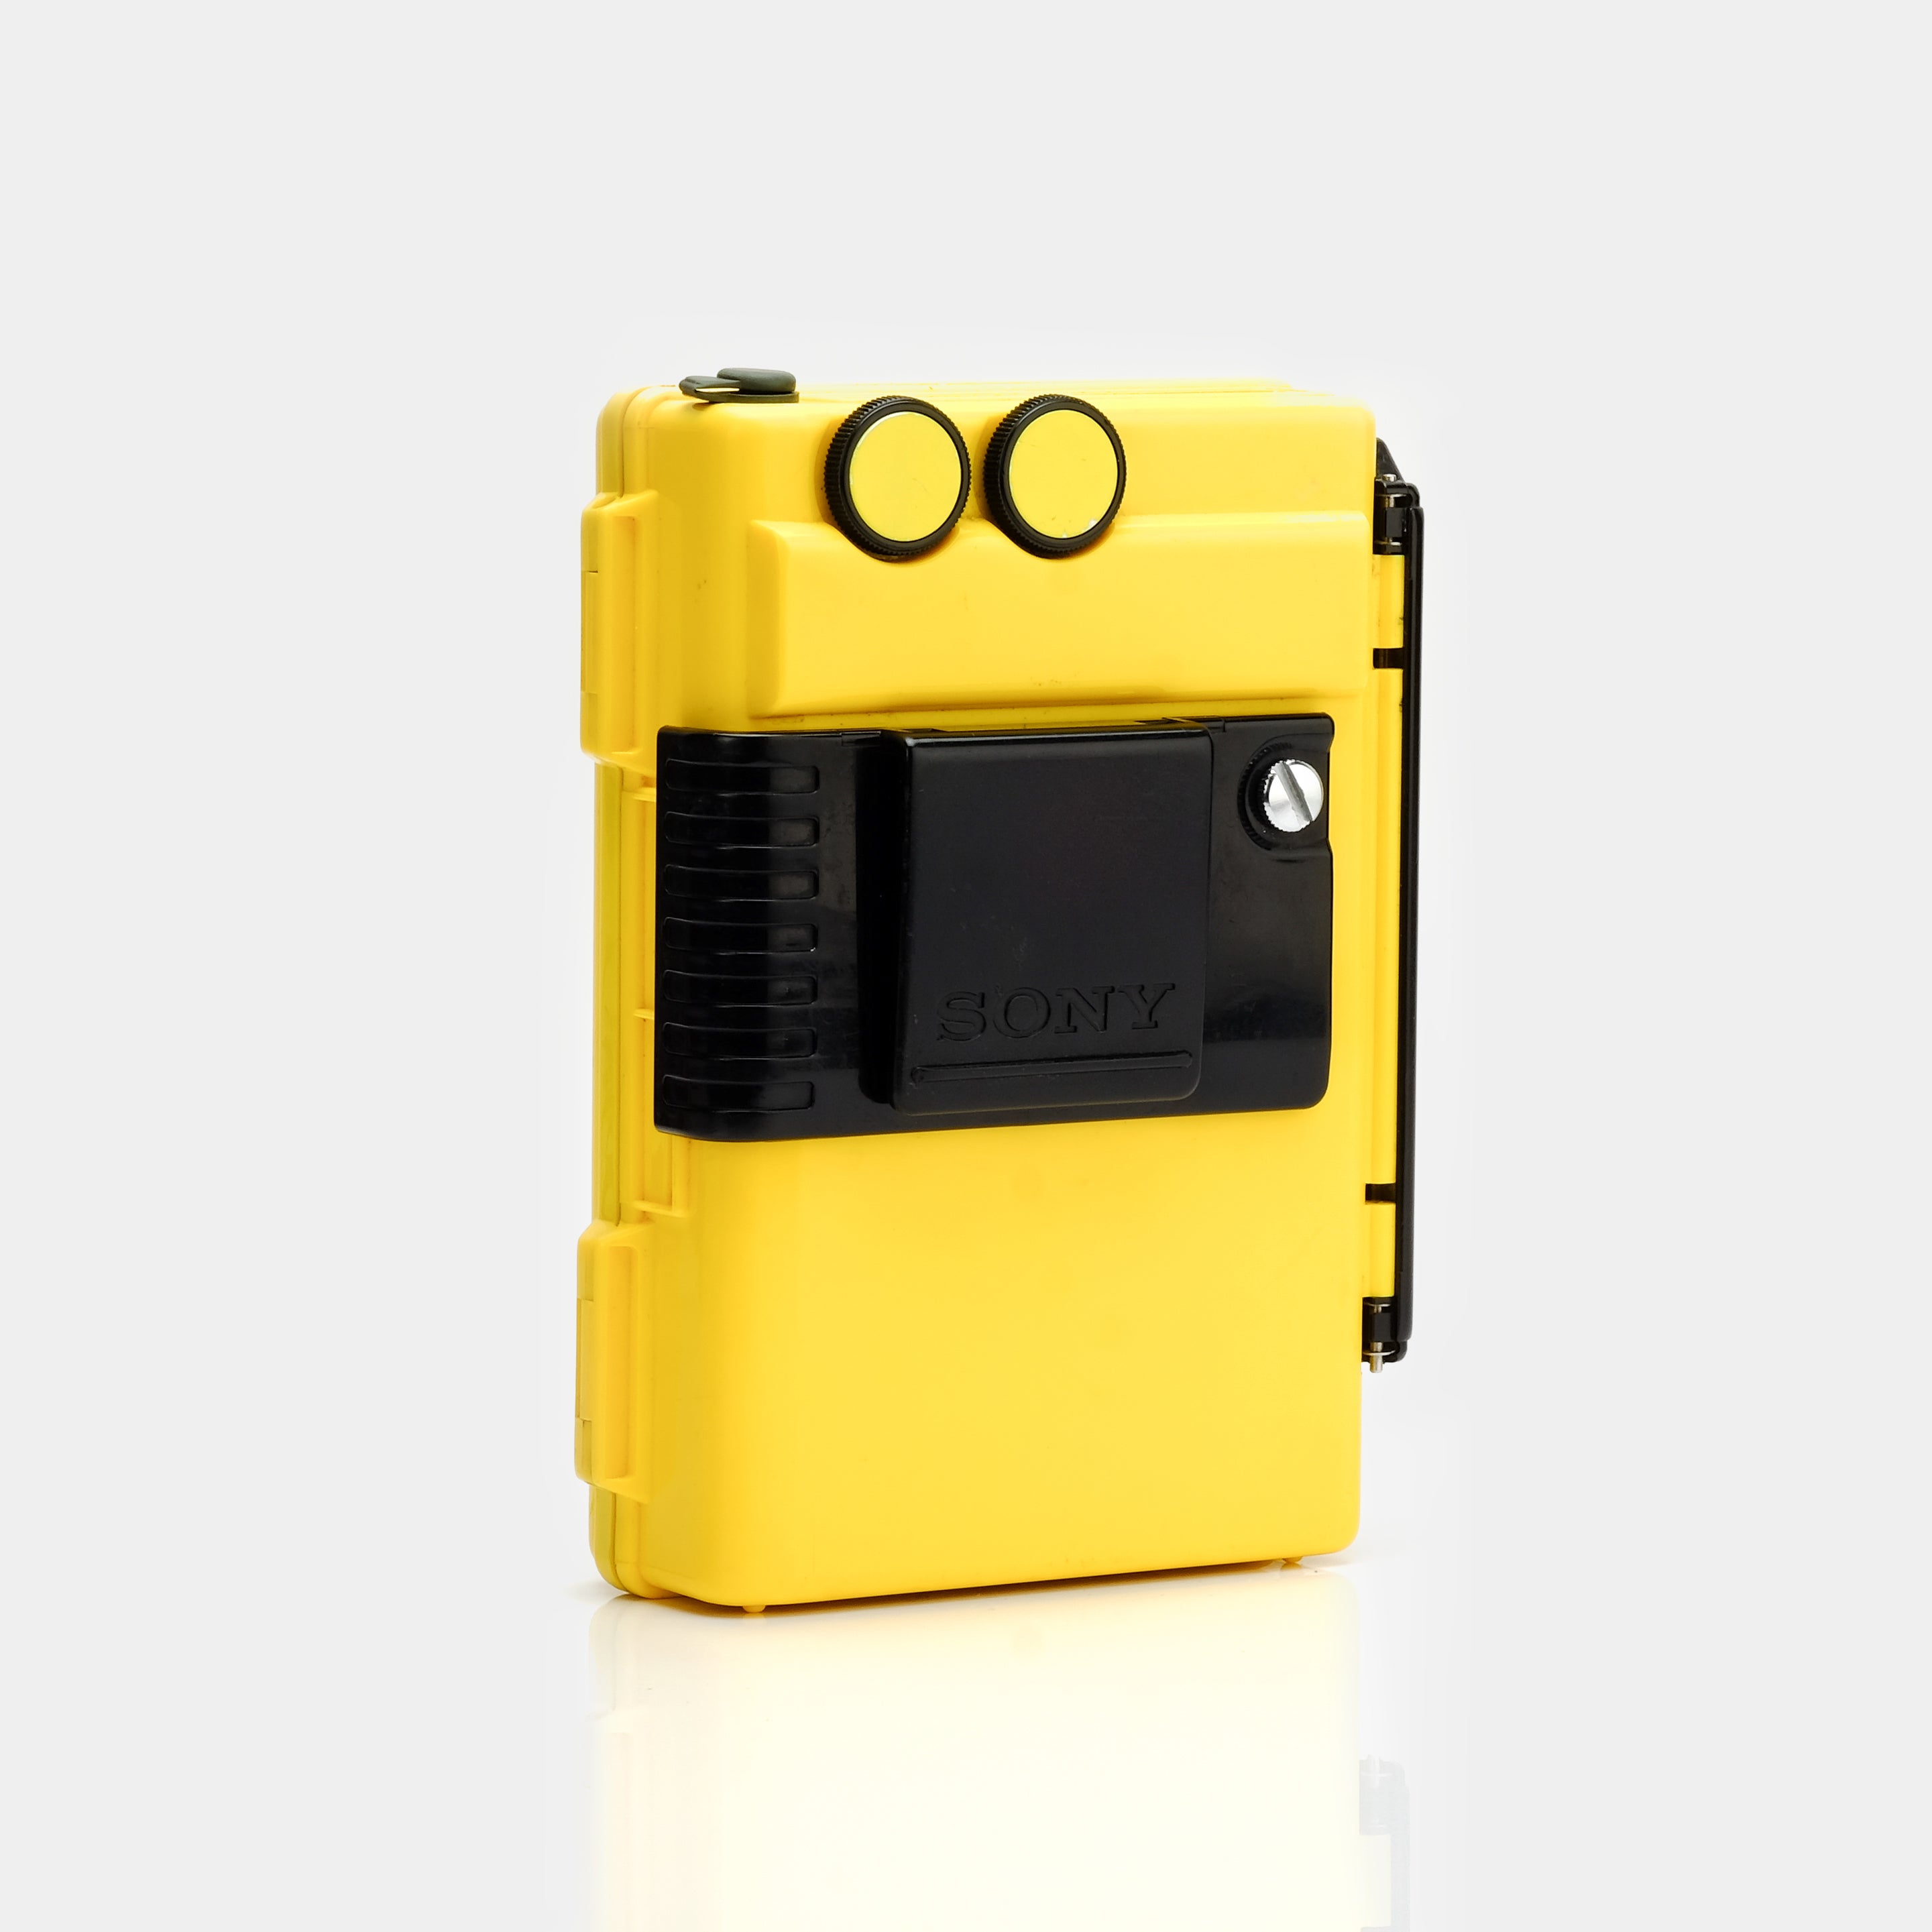 Sony Sports Walkman WM-F45 Yellow Portable Cassette Player